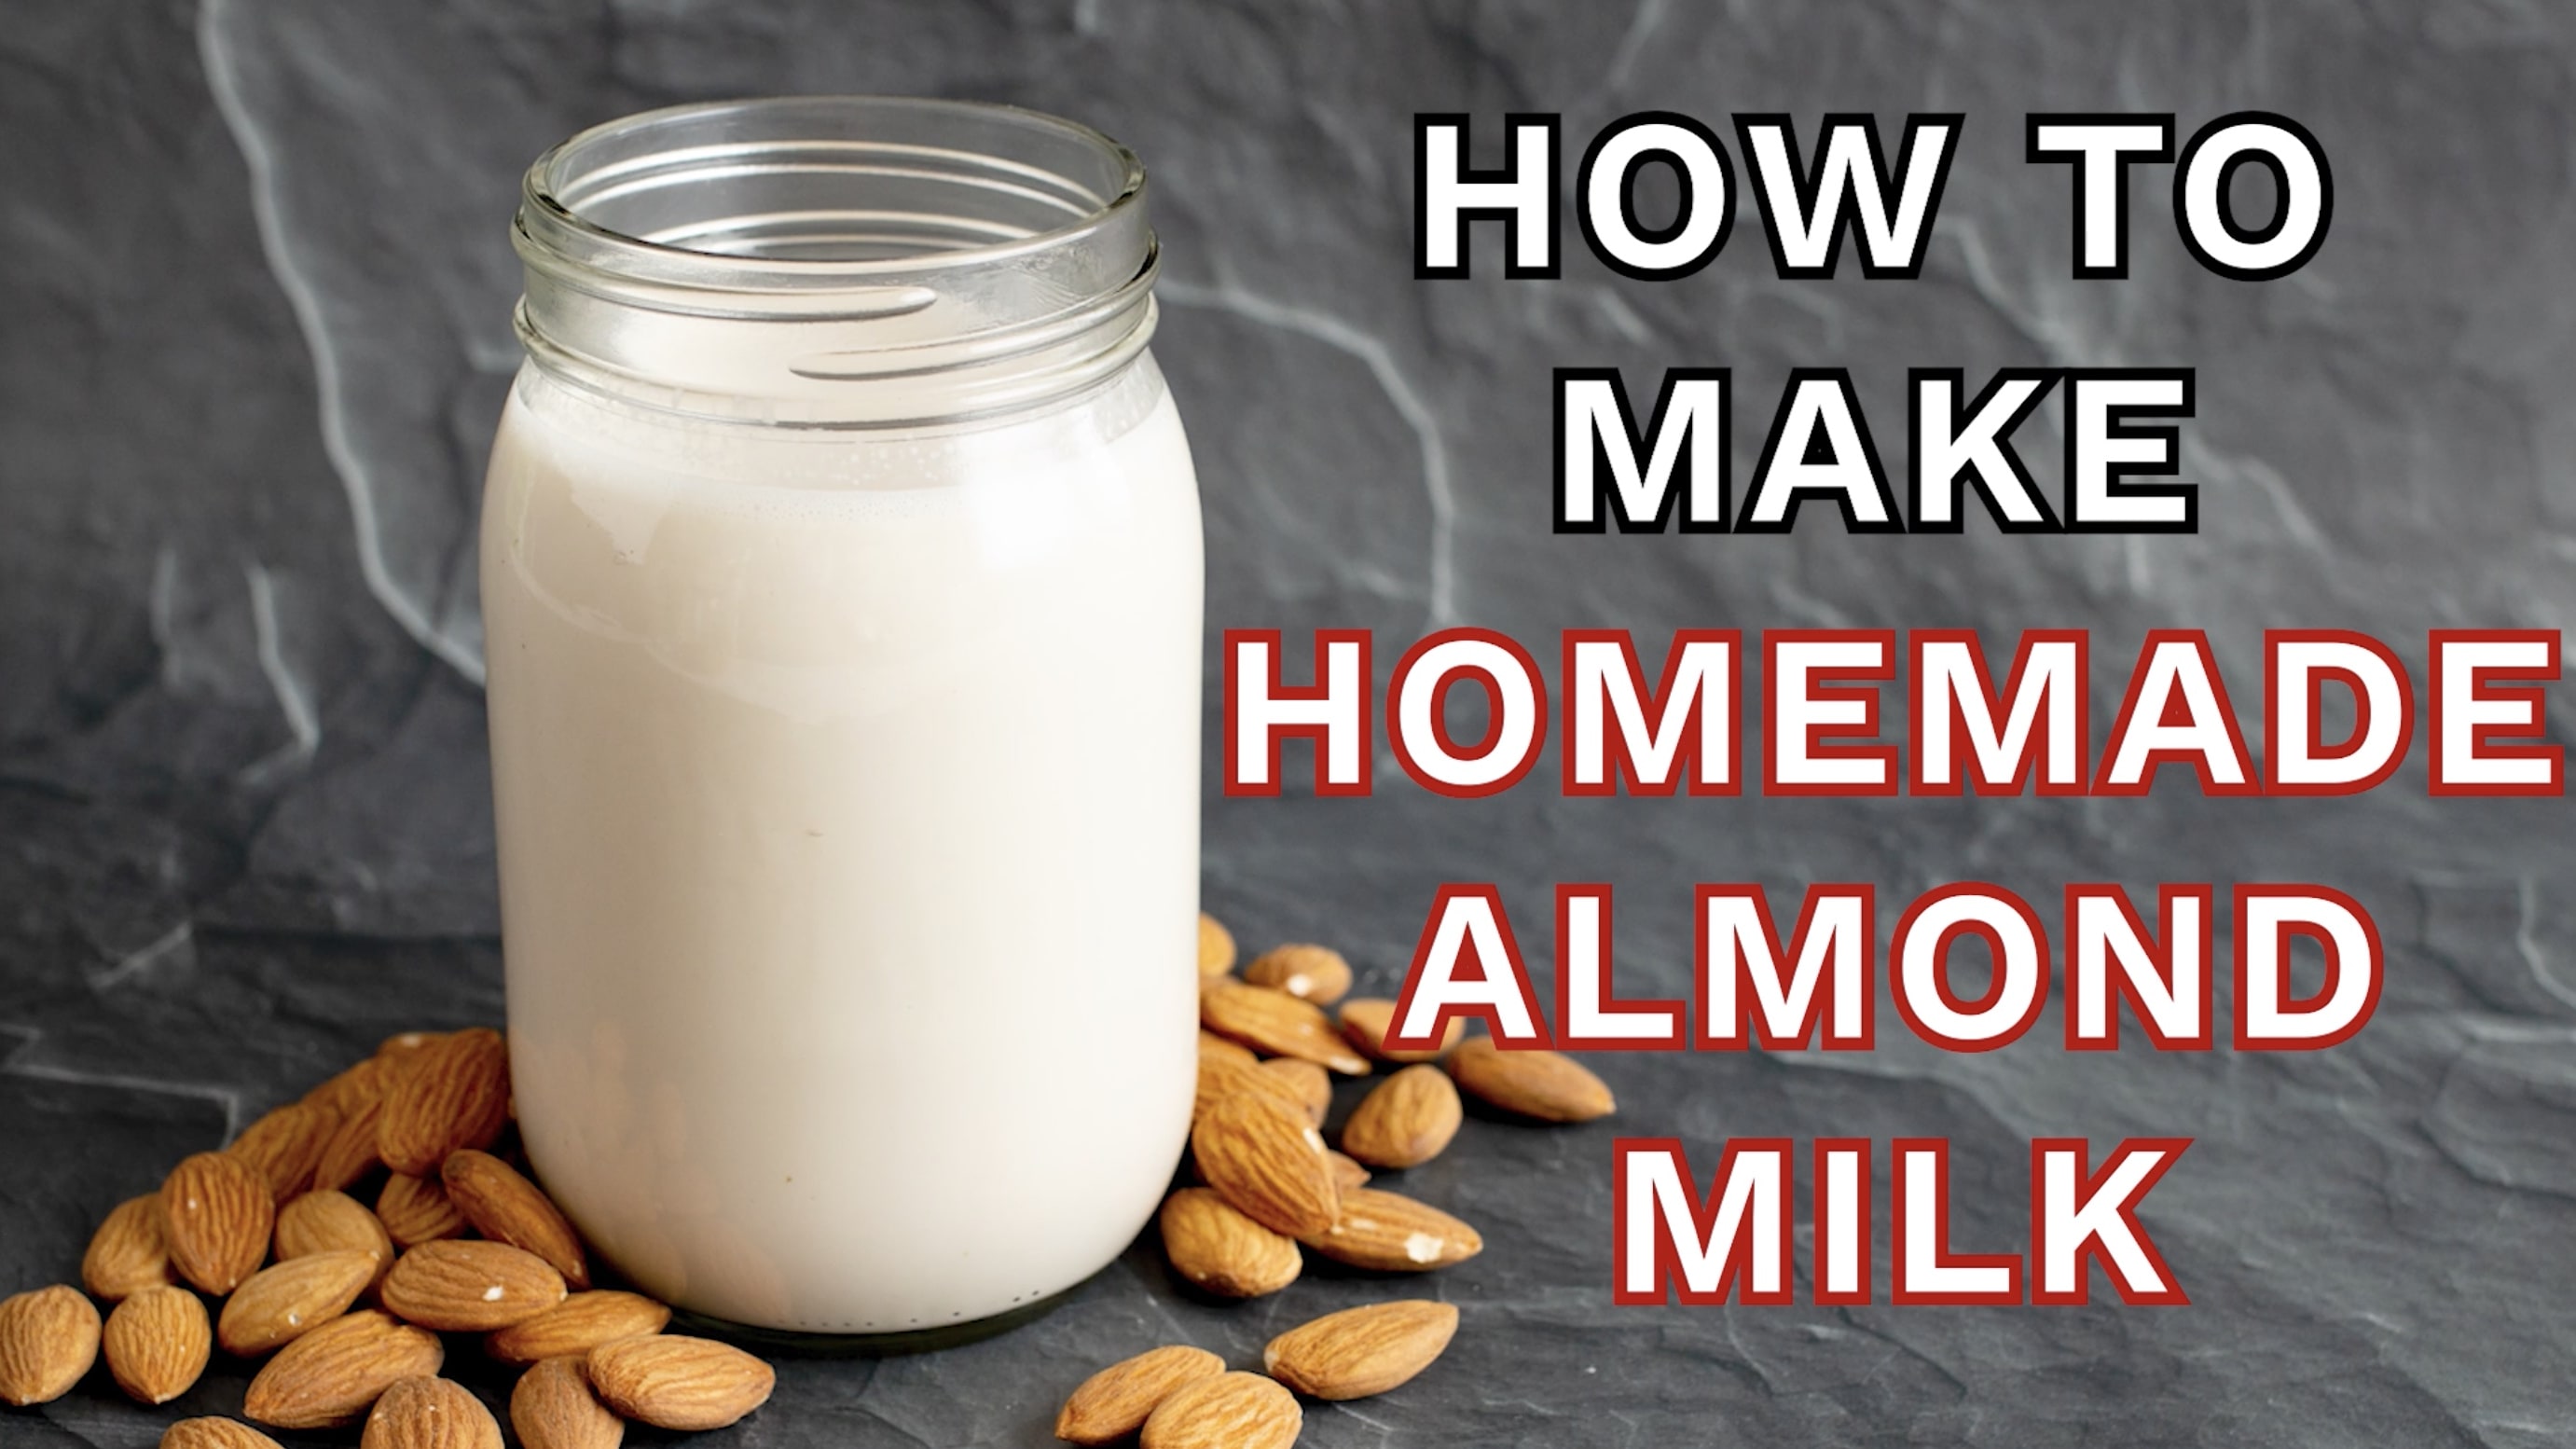 Homemade Almond Milk Using a Juicer